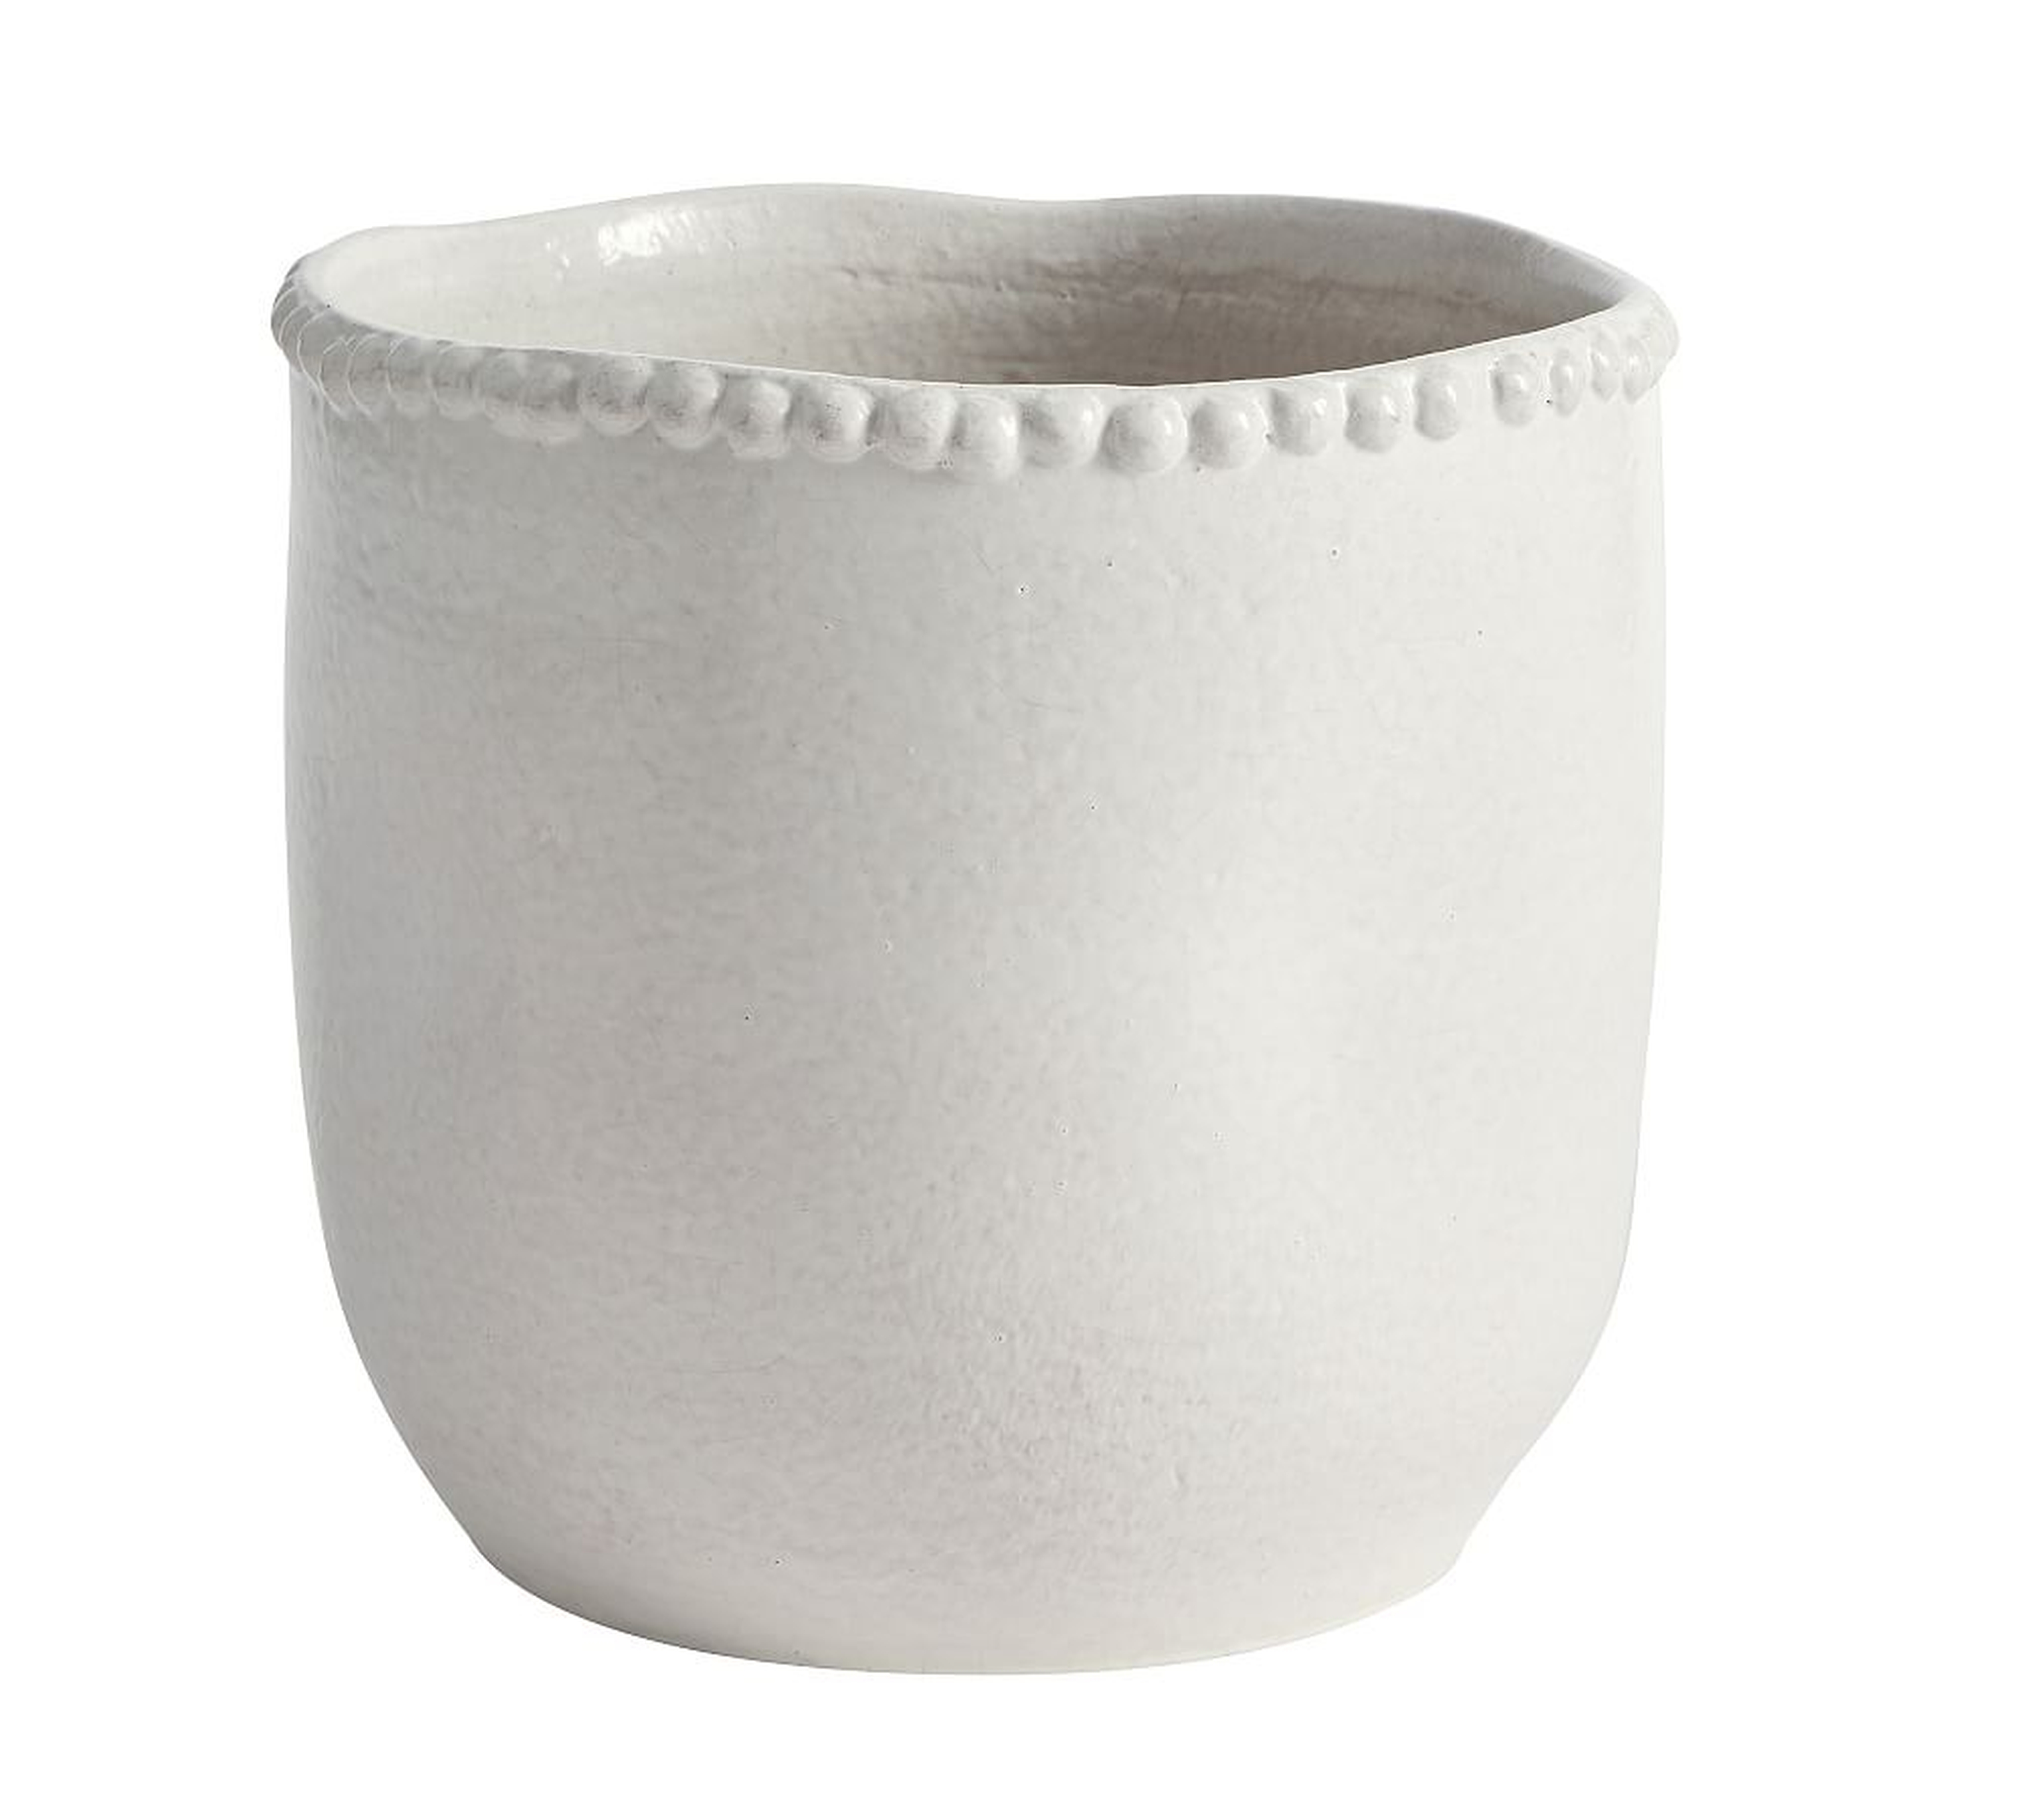 Beaded Ceramic Planter, Large - White - Pottery Barn